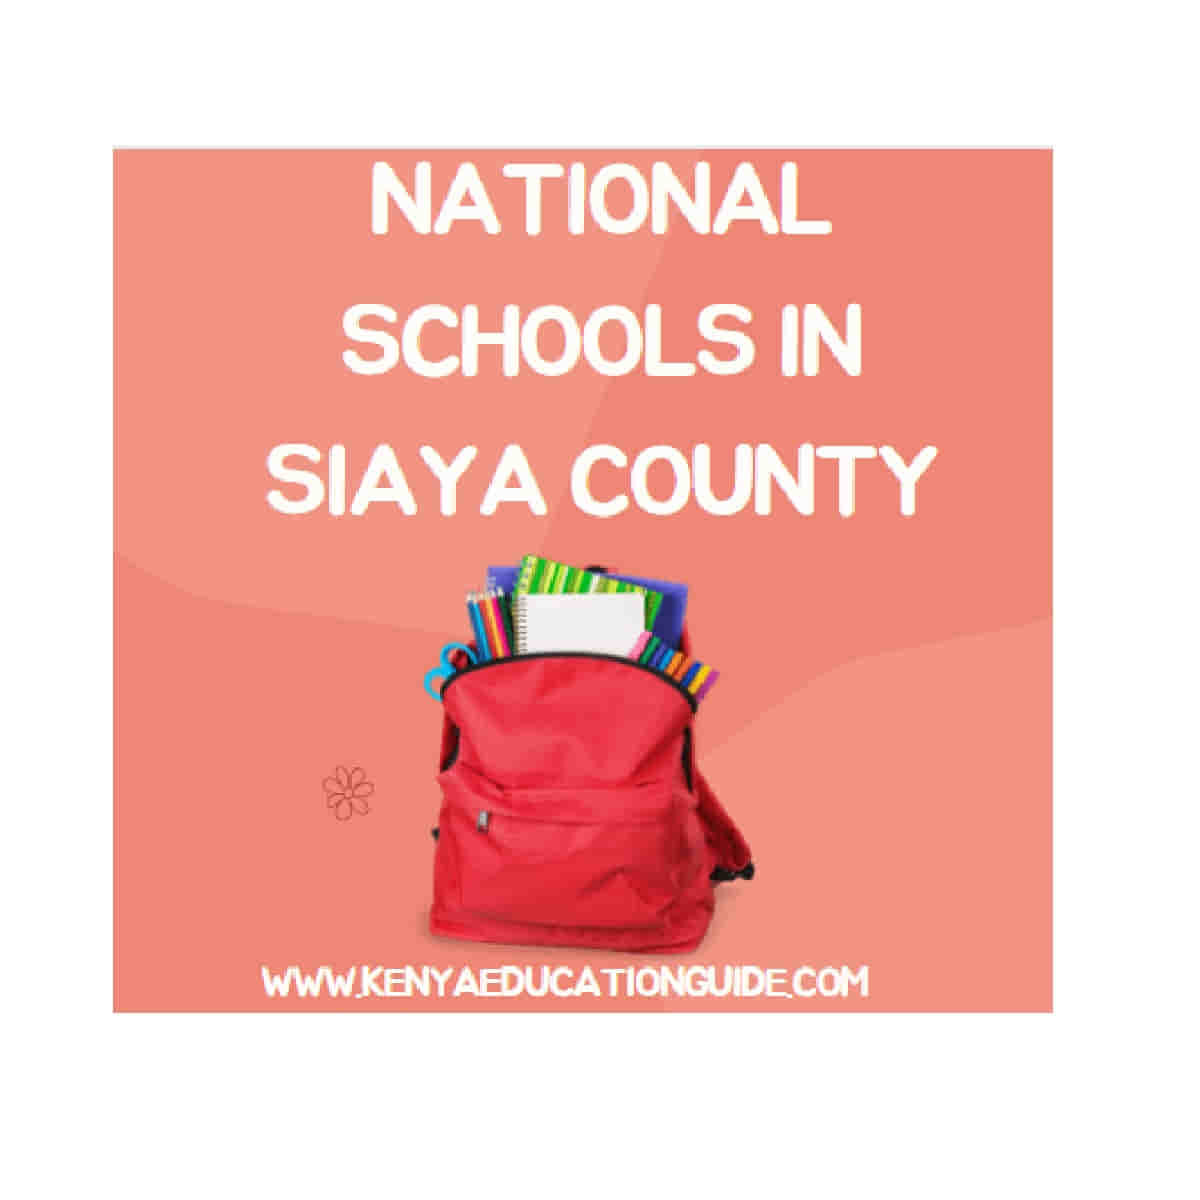 National schools in Siaya county